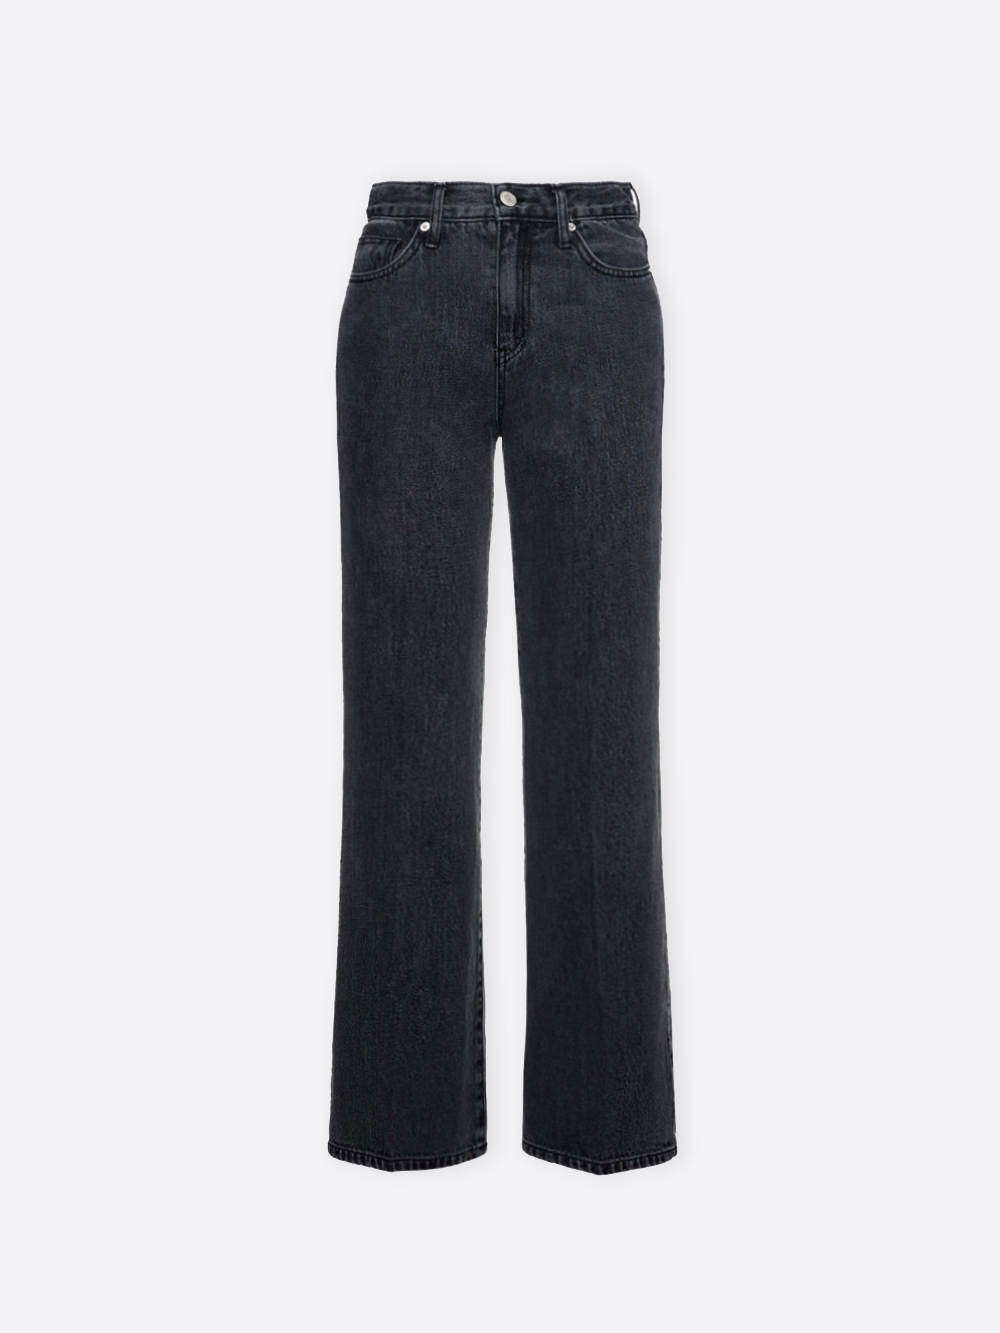 Slim dark 310 jeans